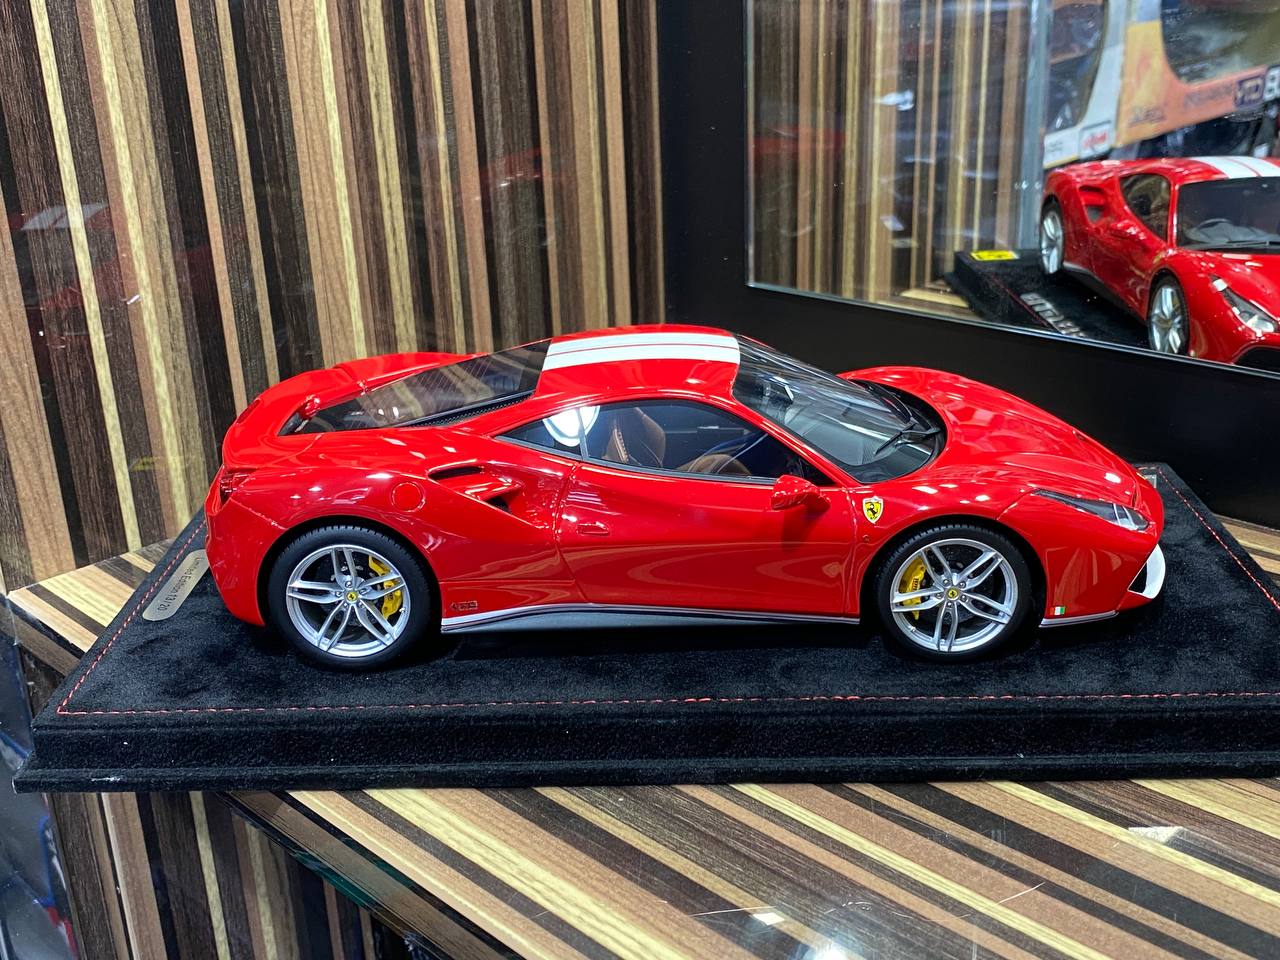 BBR Models Ferrari 488 GTB - 1/18 Resin Model, Red|Sold in Dturman.com Dubai UAE.